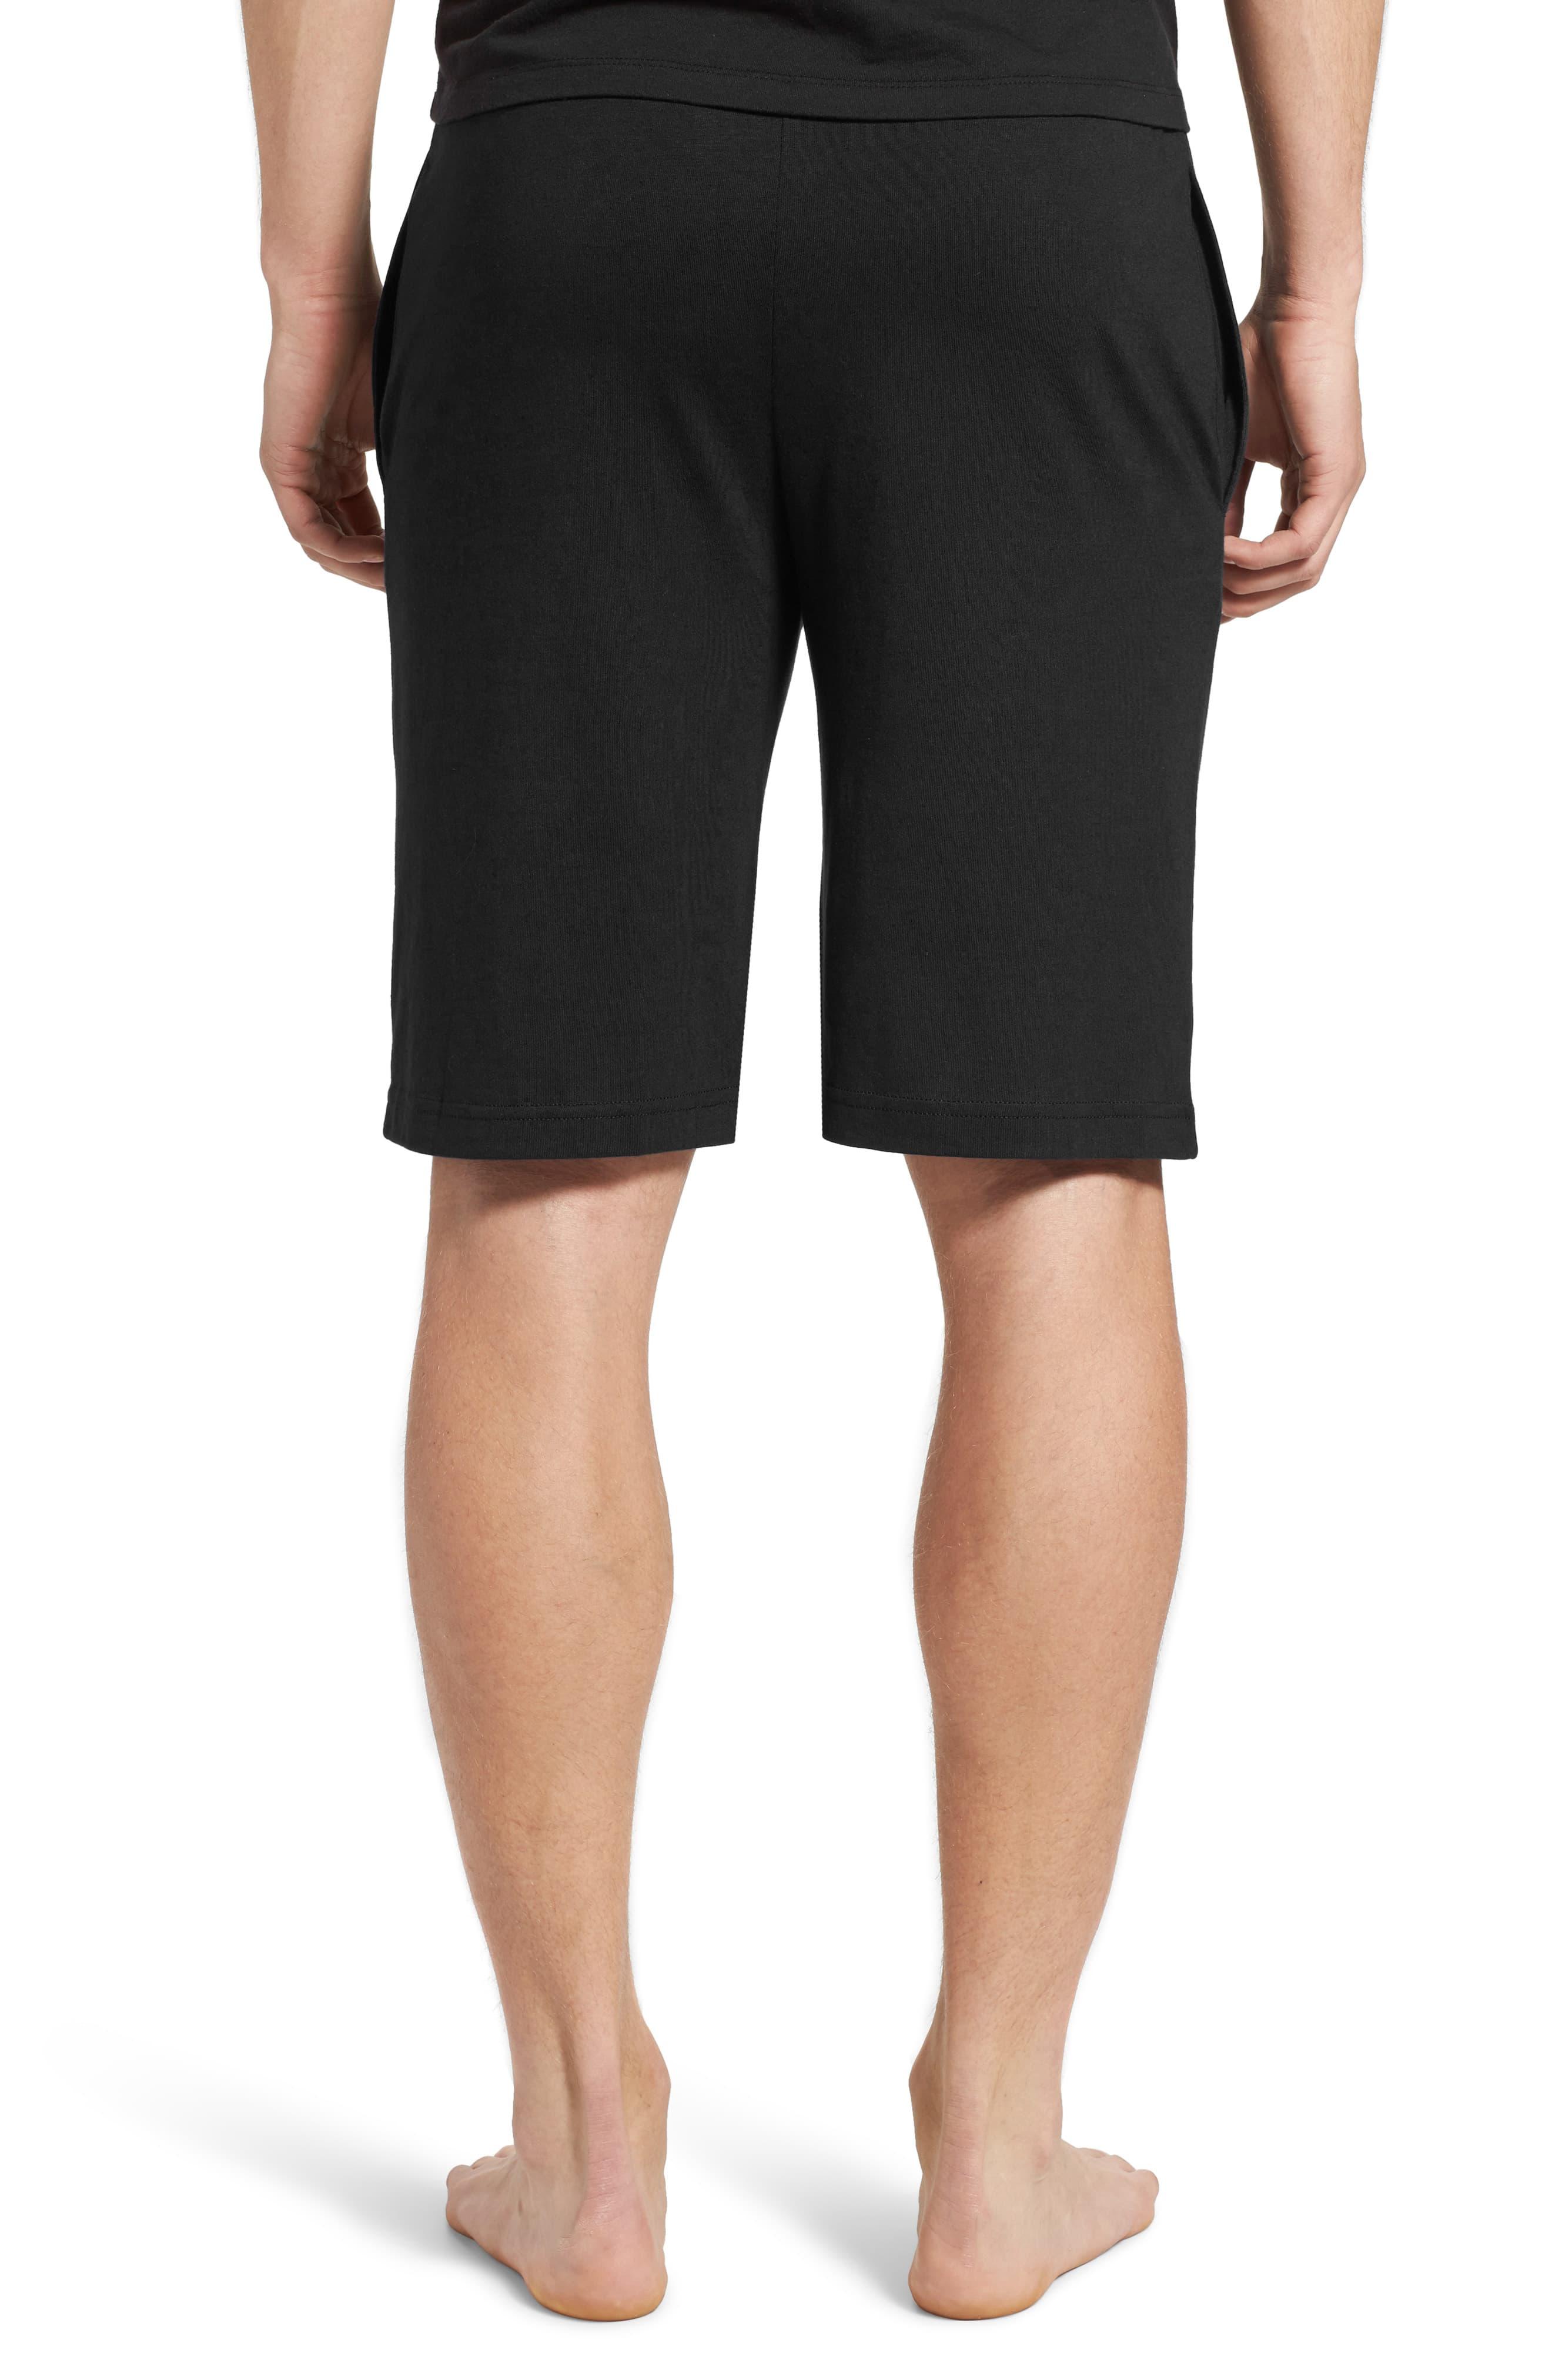 Polo Ralph Lauren Cotton Sleep Shorts in Black for Men - Lyst